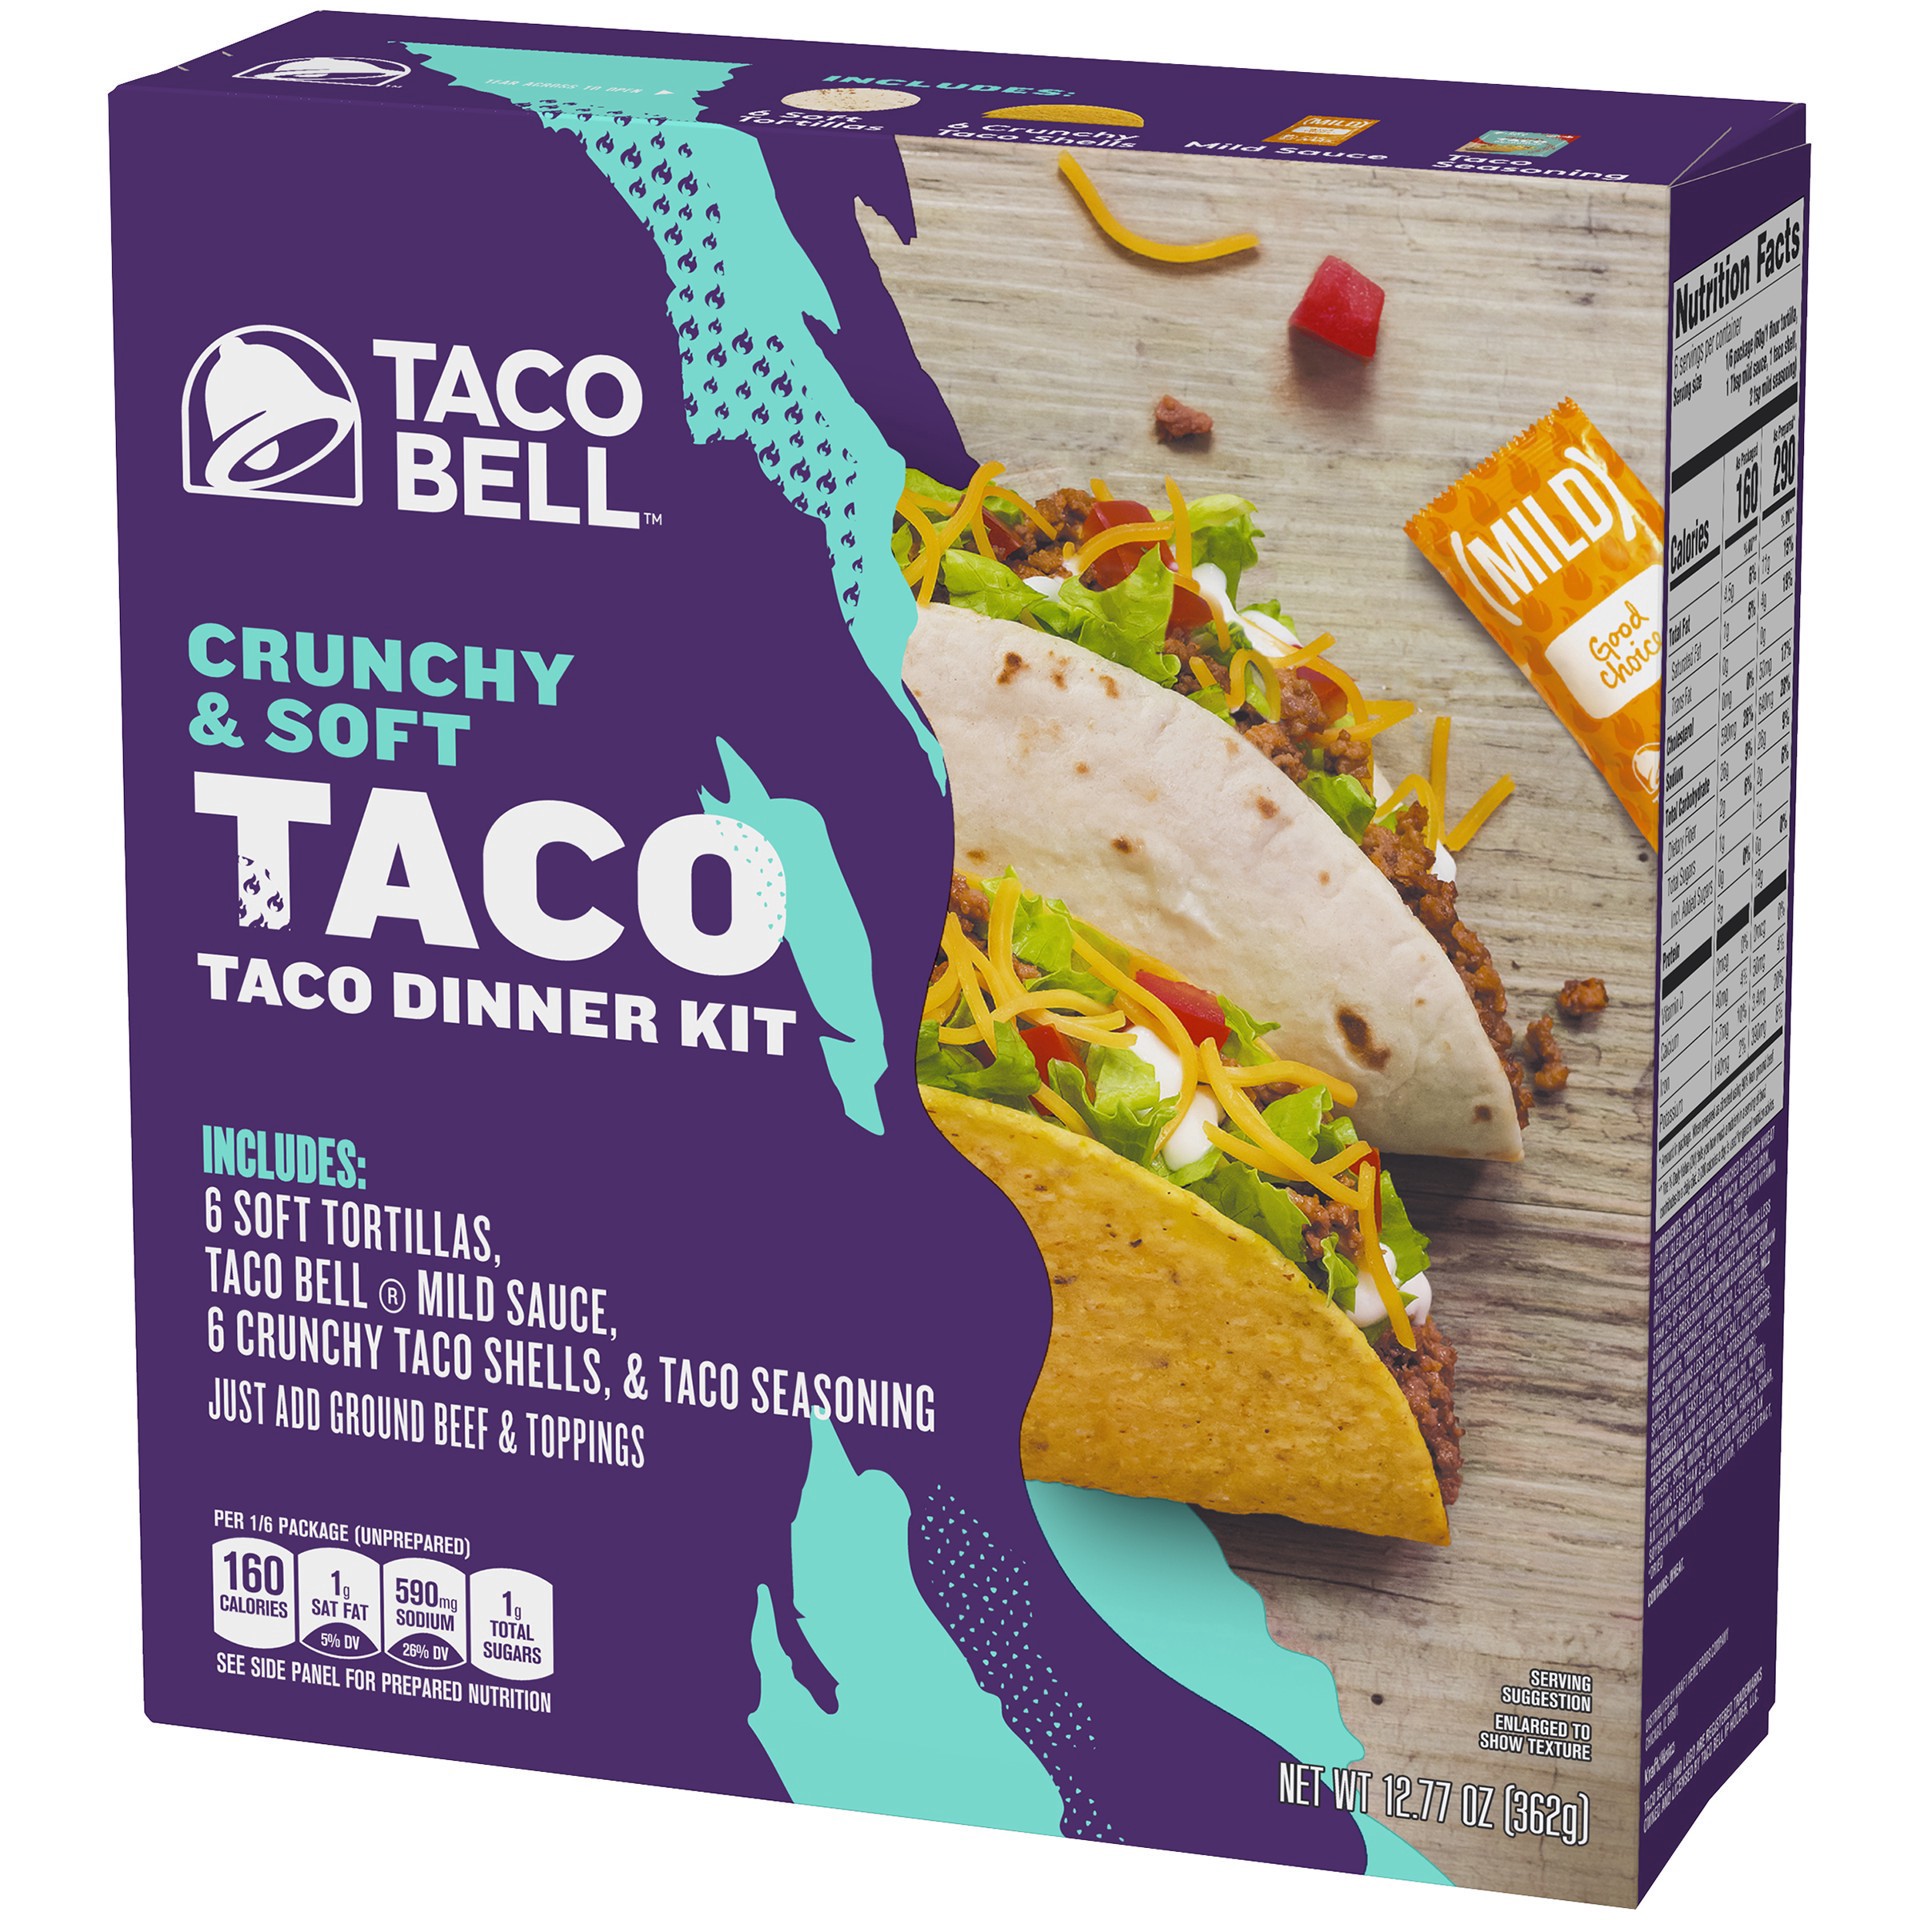 slide 50 of 101, Taco Bell Crunchy & Soft Taco Cravings Kit with 6 Soft Tortillas, 6 Crunchy Taco Shells, Taco Bell Mild Sauce & Seasoning, 12.77 oz Box, 1 ea